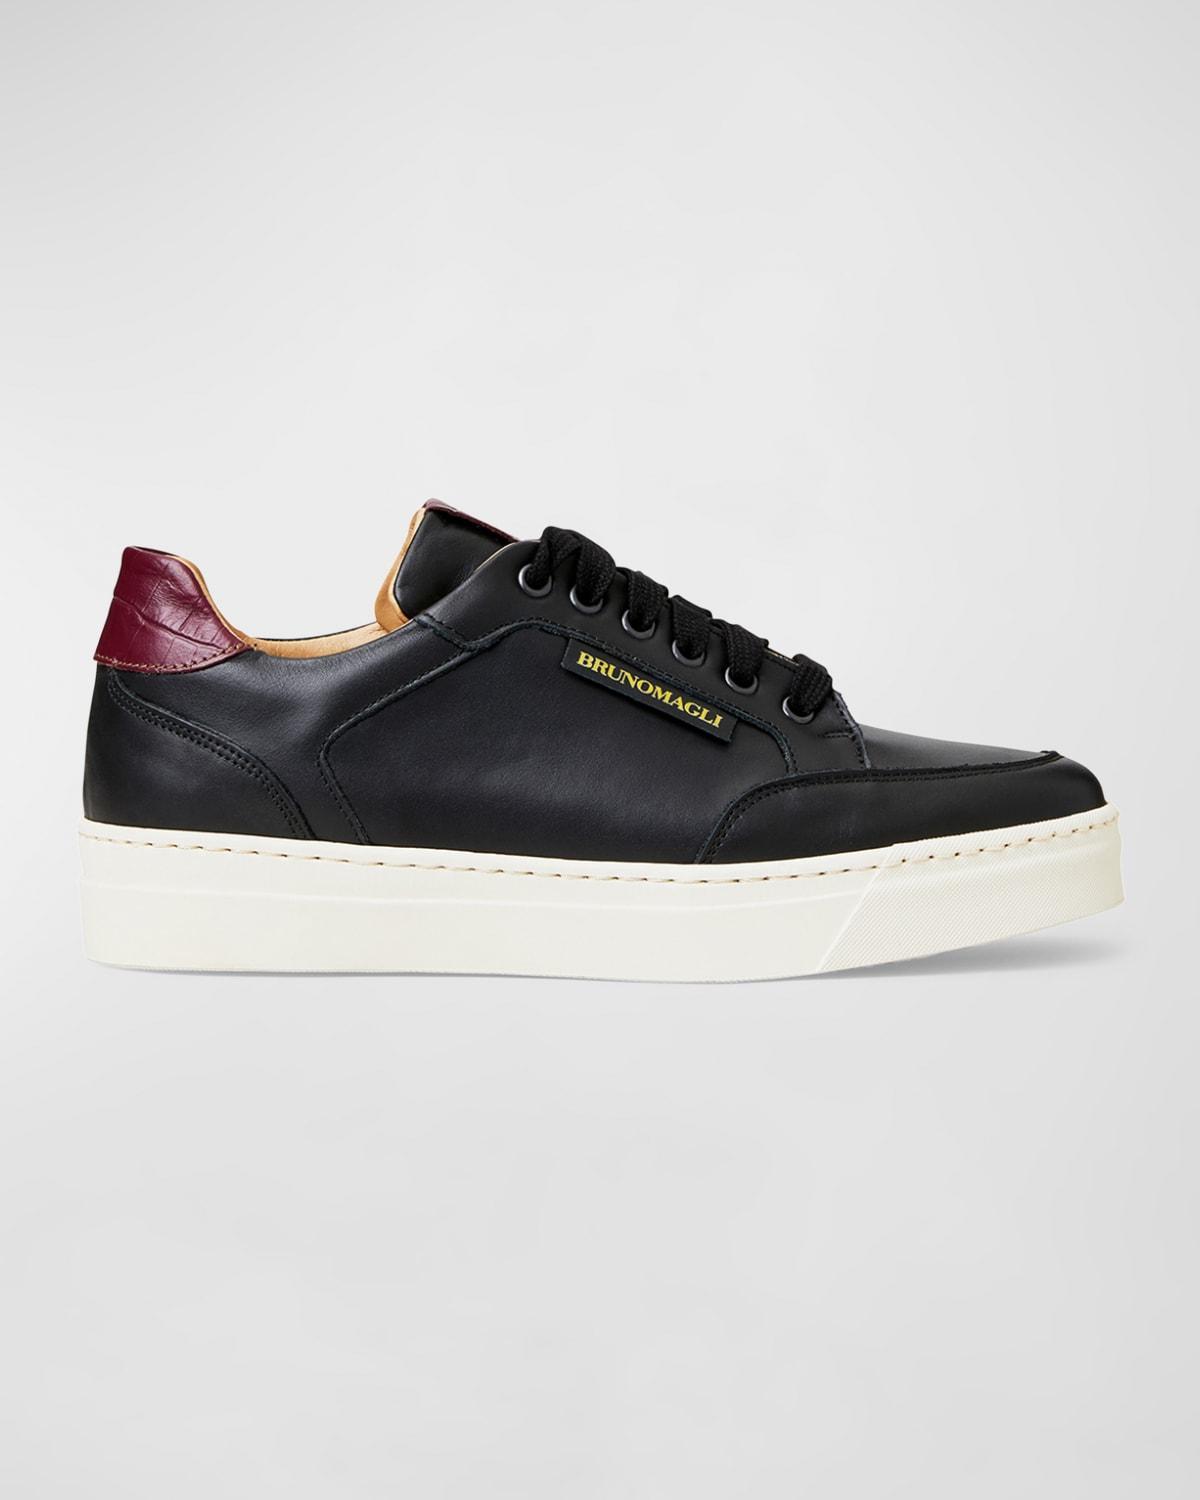 Bruno Magli Severo Platform Sneaker Product Image